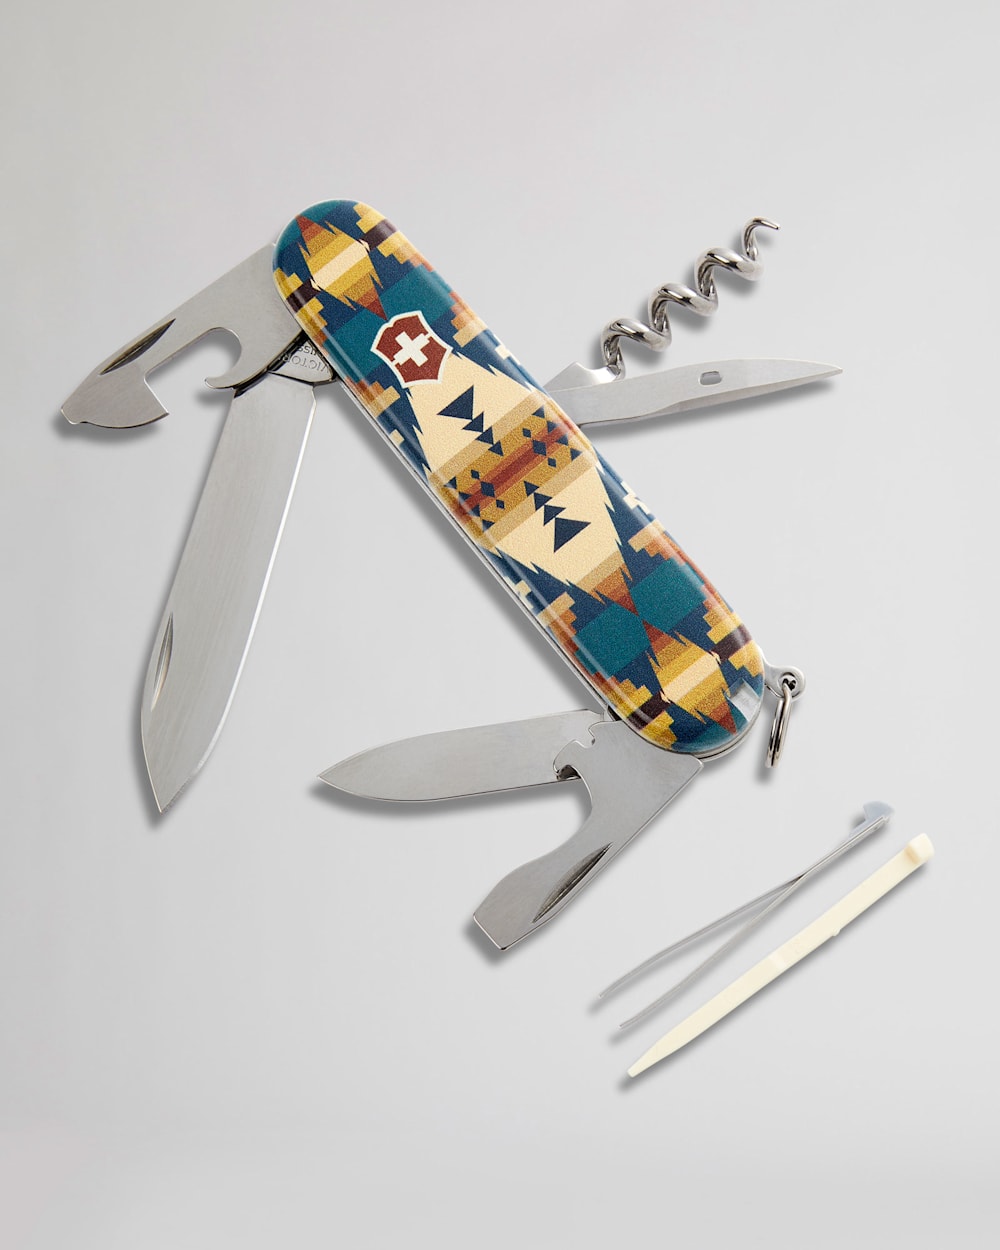 ALTERNATE VIEW OF SISKIYOU SPARTAN KNIFE IN SISKIYOU image number 4